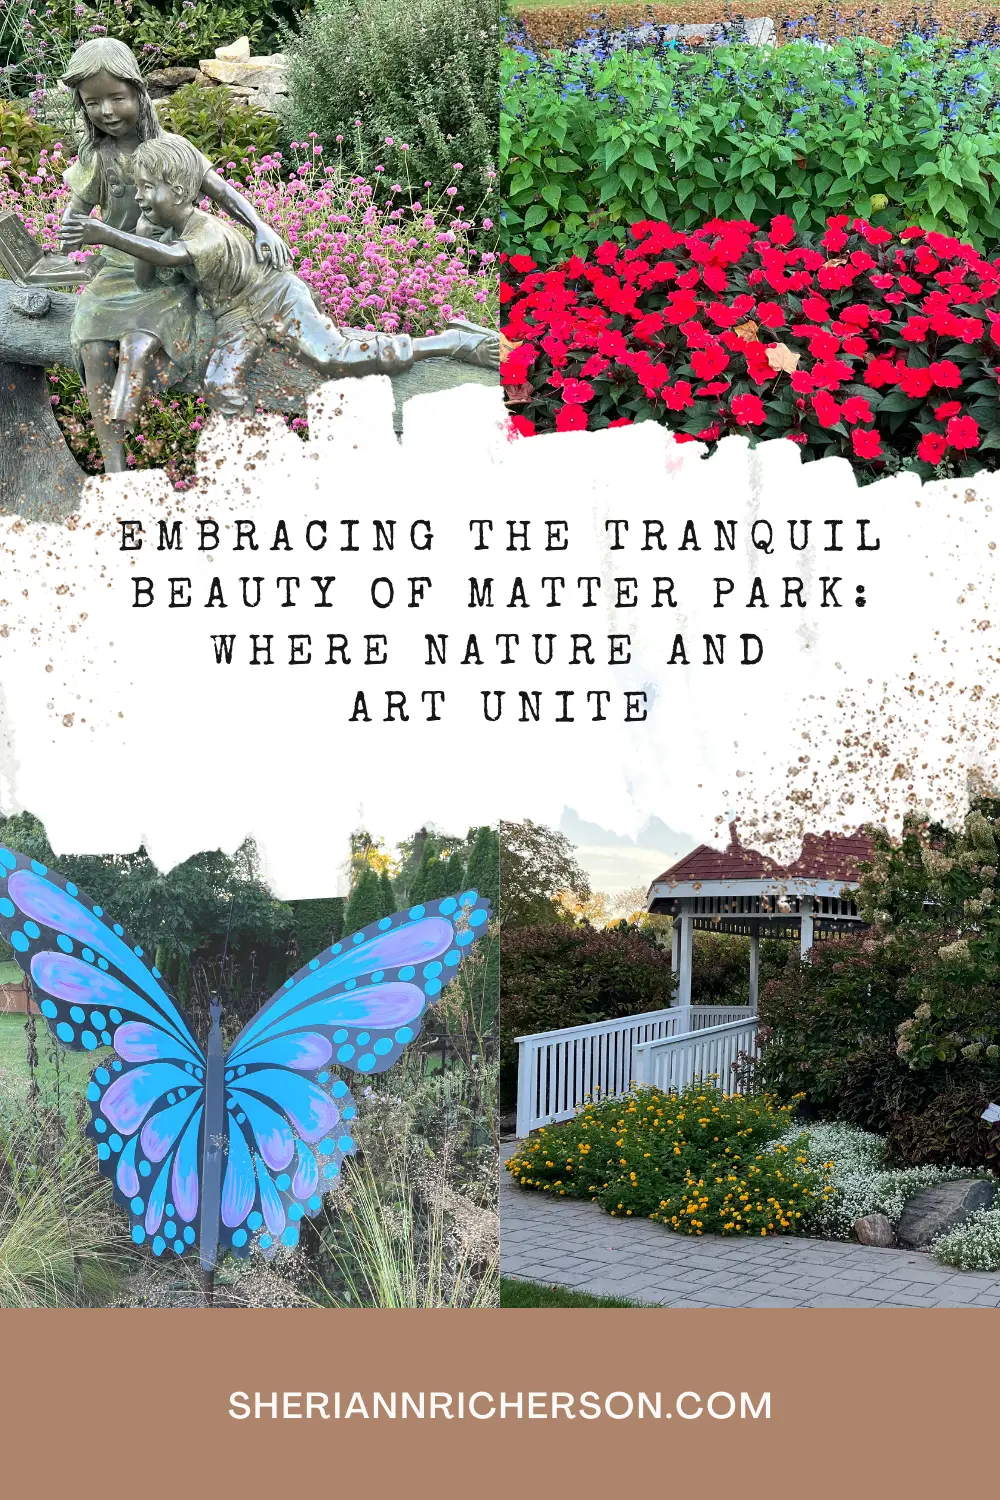 Various images taken at Matter Park in Marion, Indiana